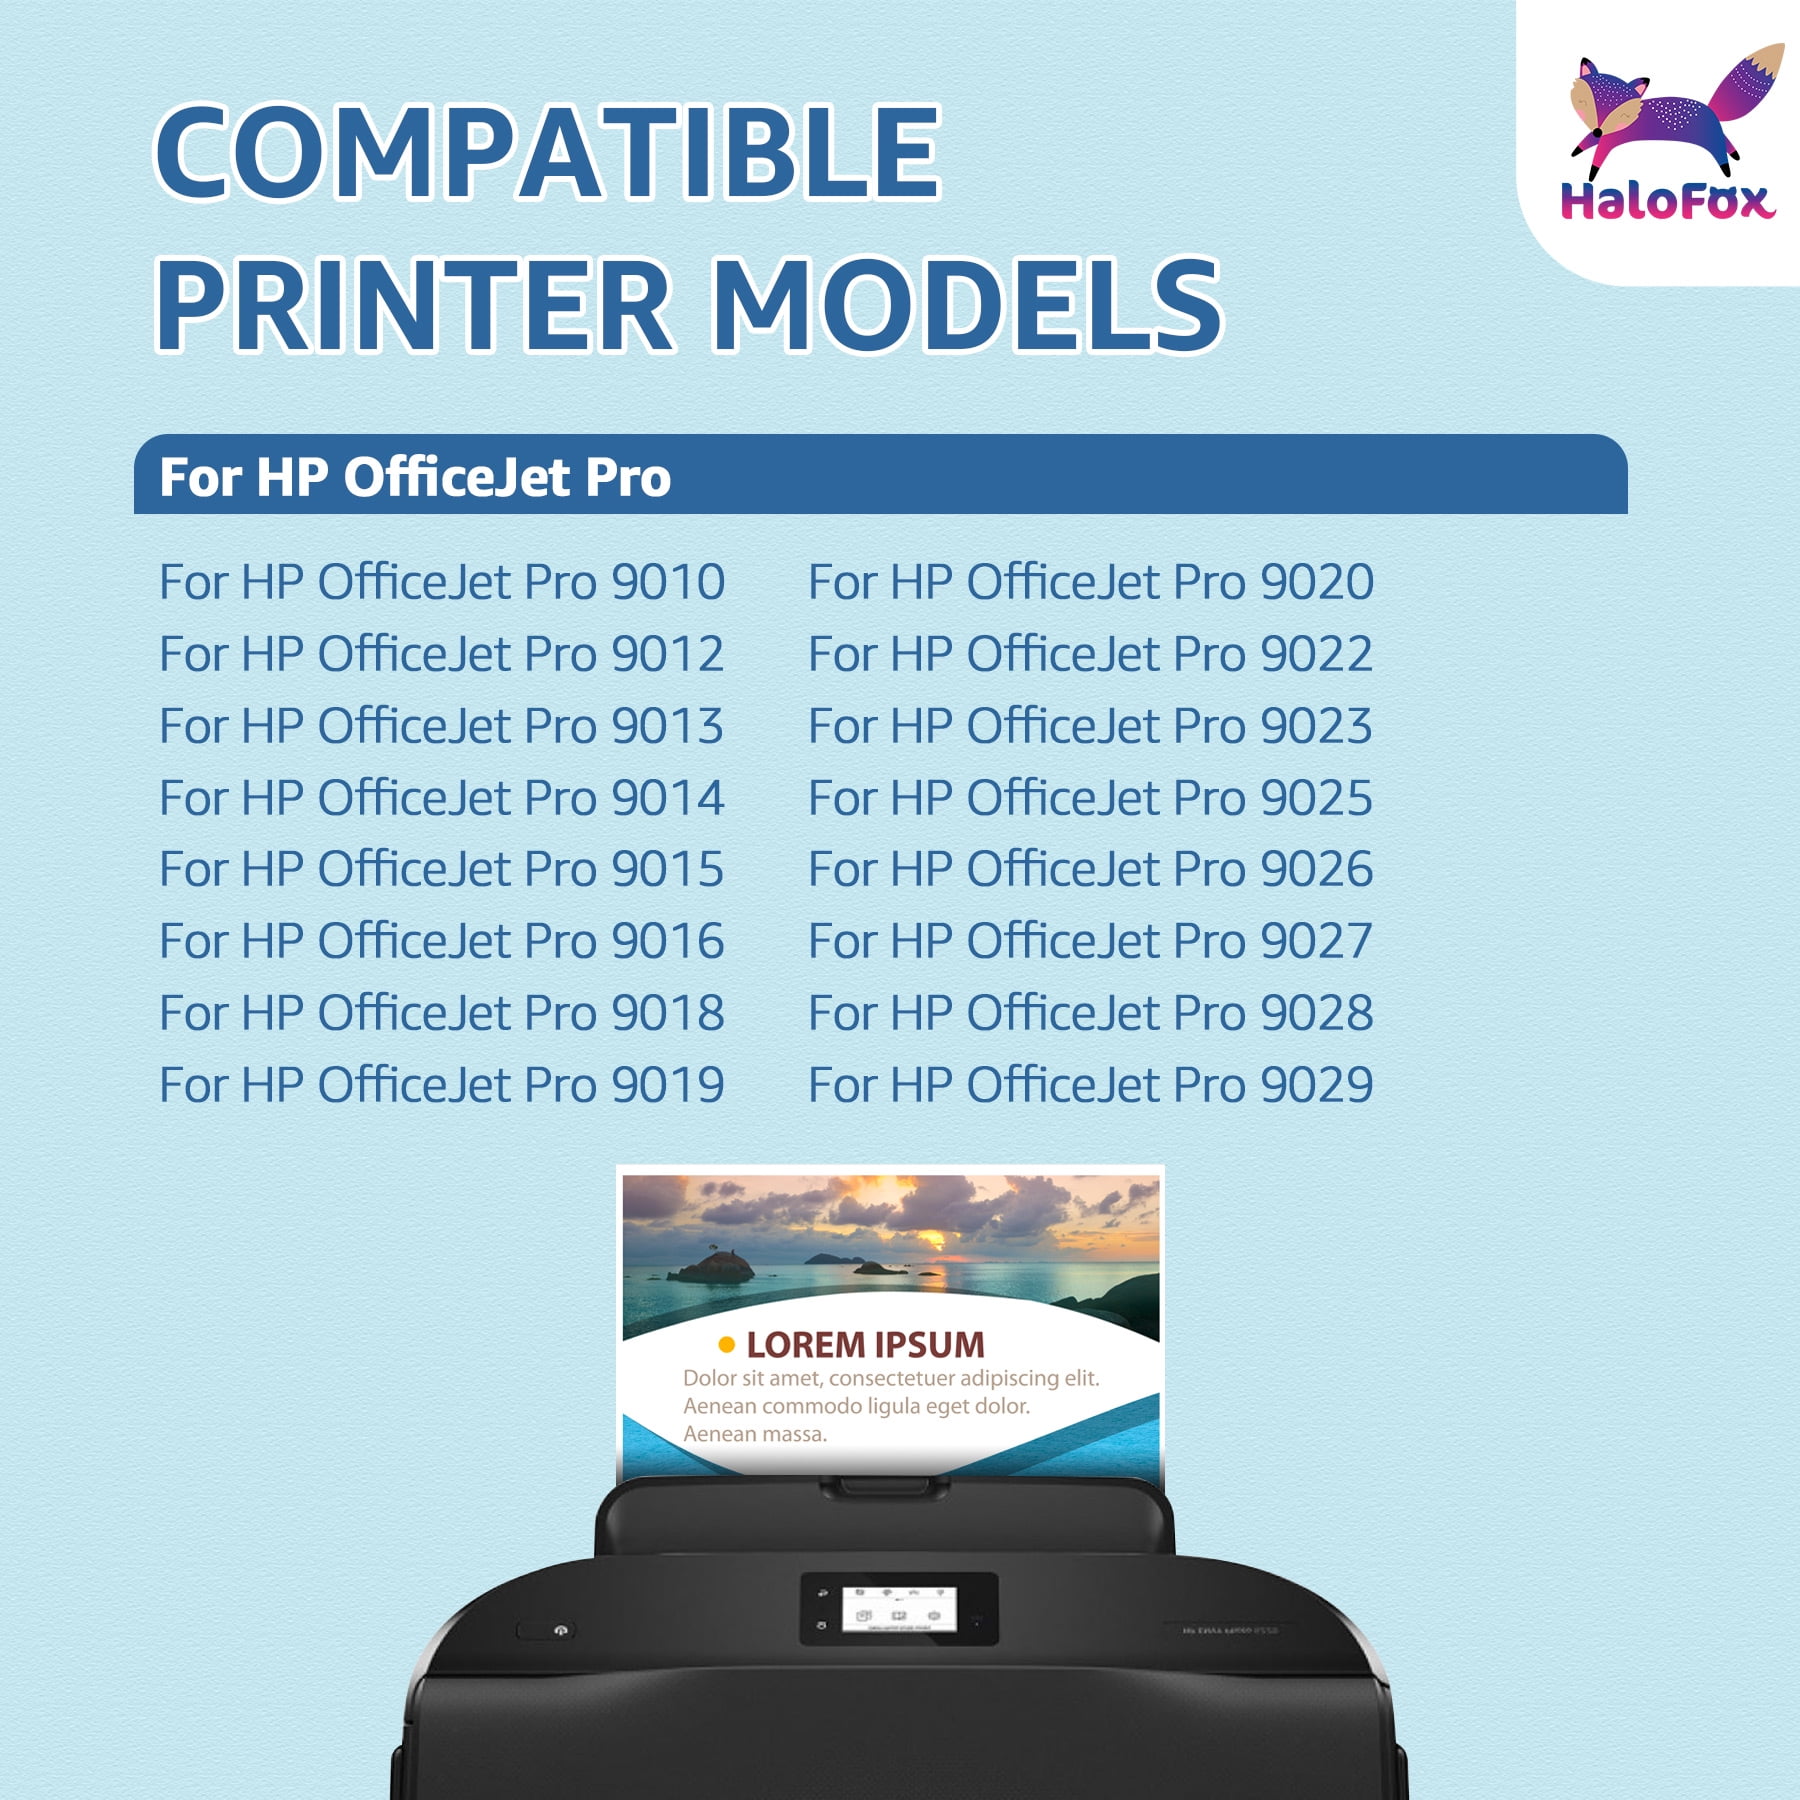 962XL Ink Cartridges for HP 962 XL OfficeJet Pro 9015 9025 9020